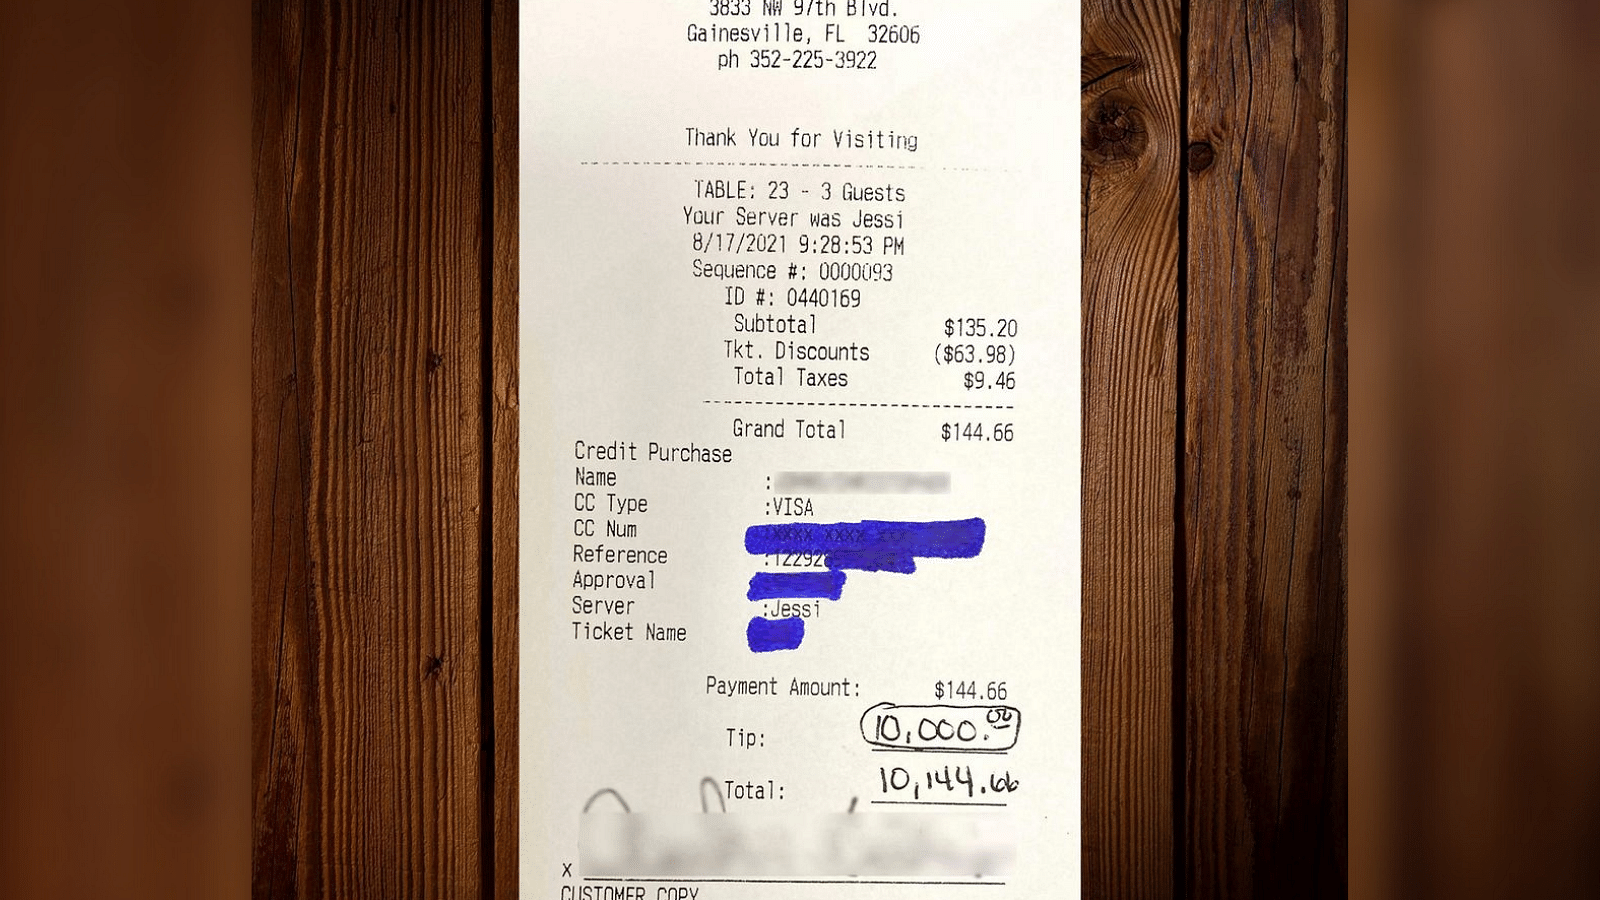 <div class="paragraphs"><p>Florida man leaves $10,000 tip for restaurant staff.</p></div>